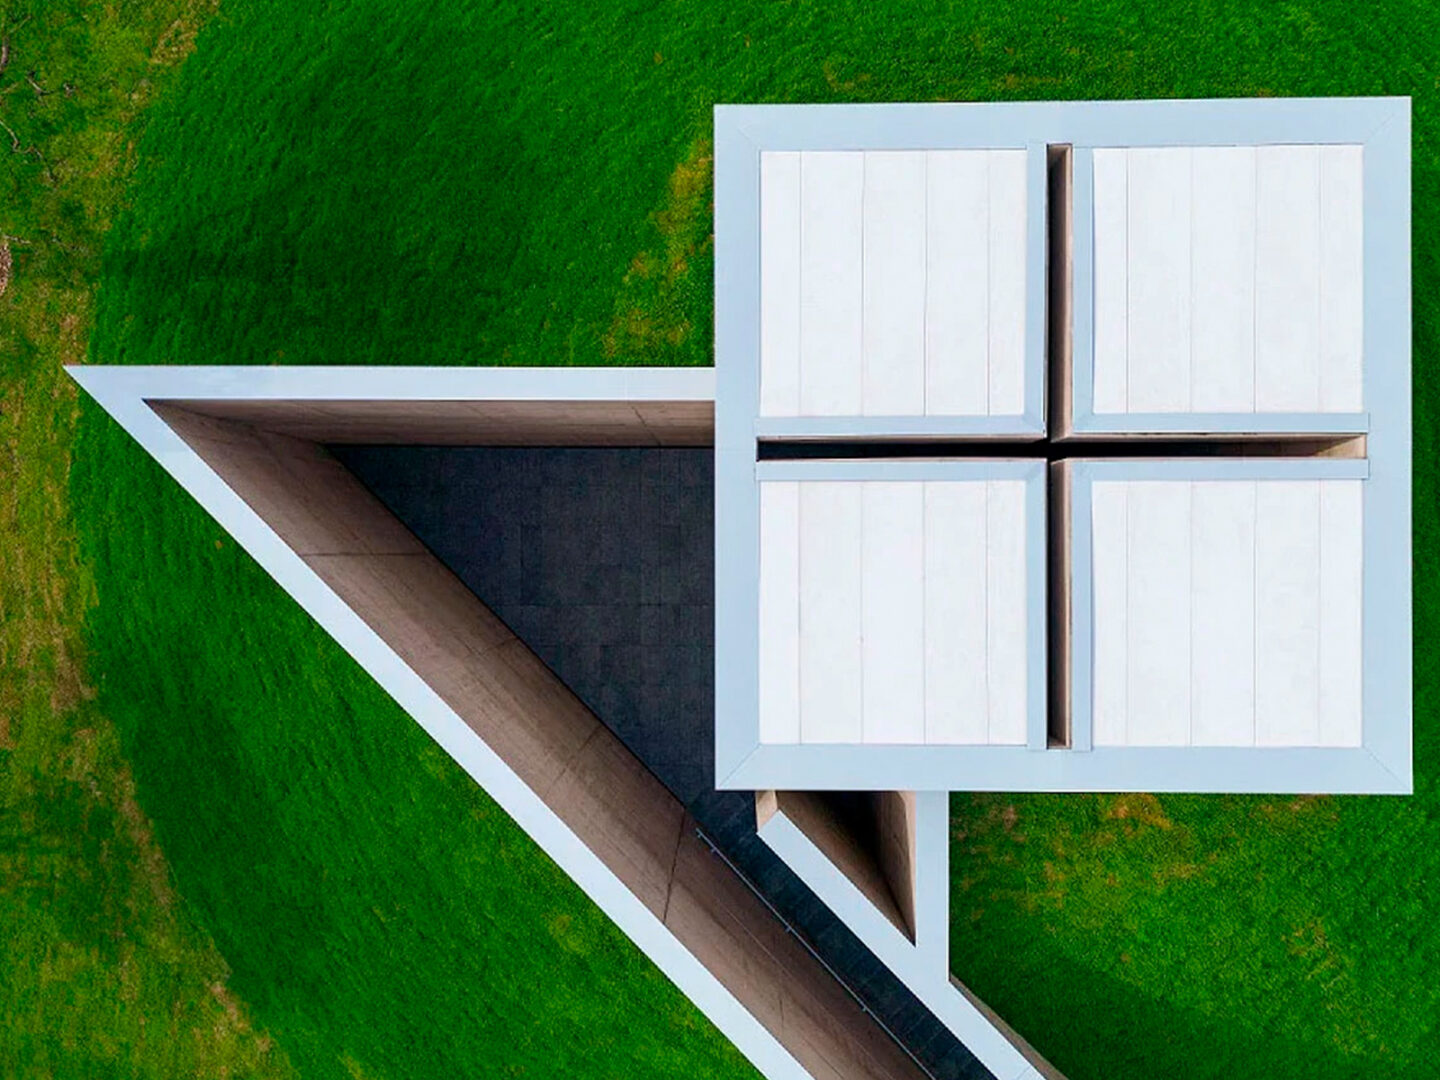 Architect Tadao Ando inaugurates meditation pavilion ‘Space of Light’